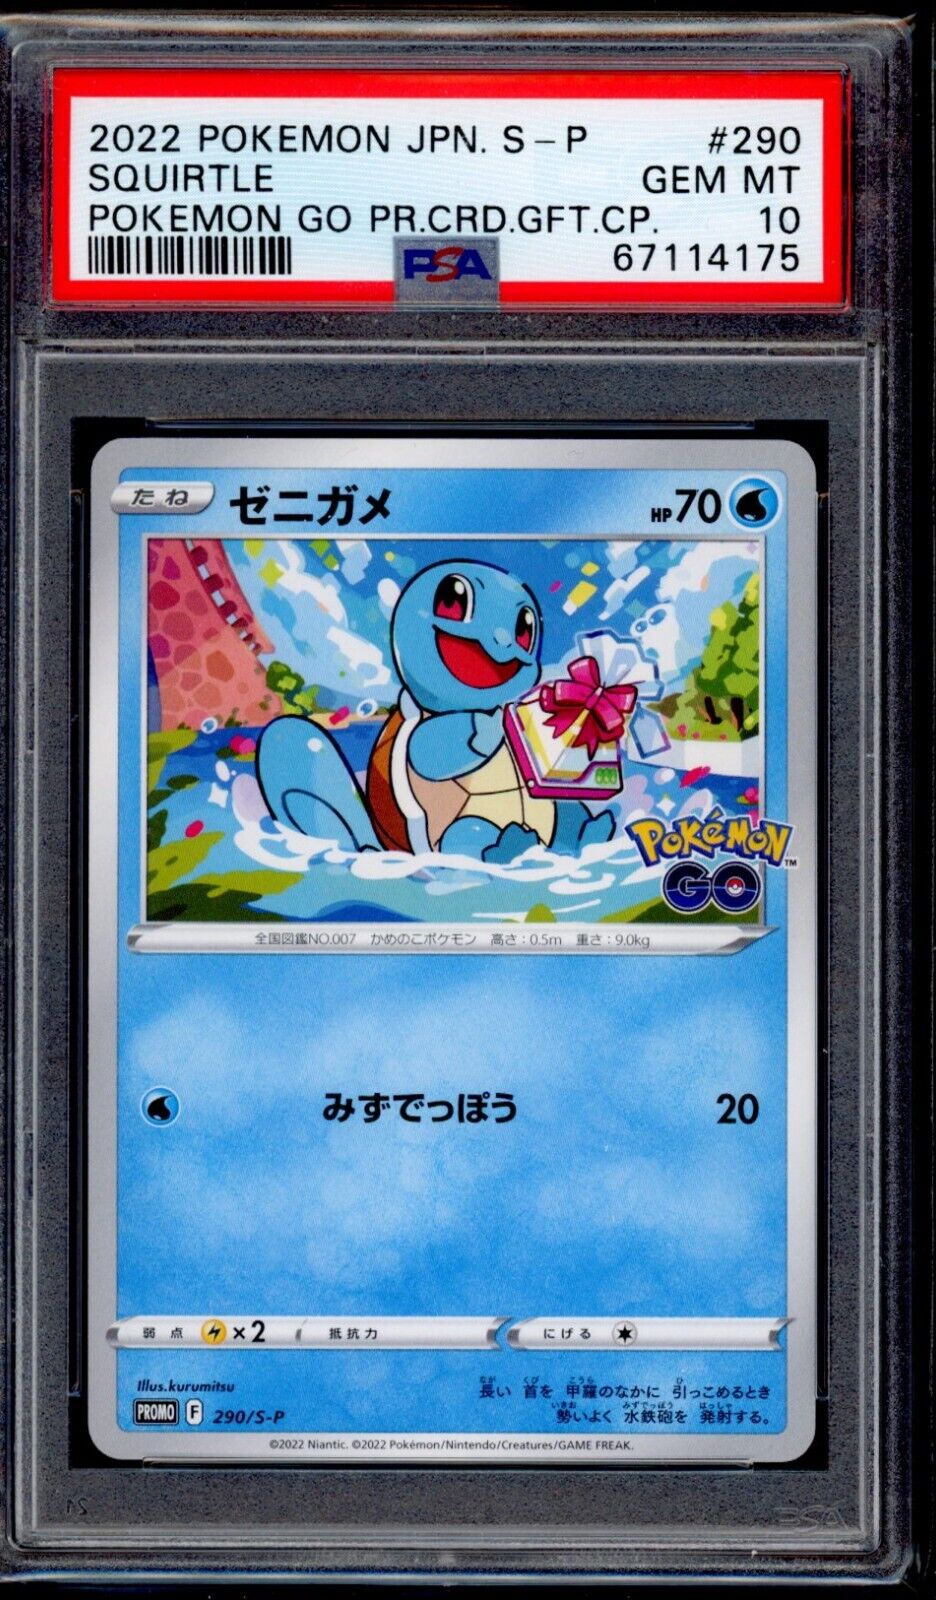 PSA 10 Squirtle 2022 Pokemon Card 290/S-P Pokemon Go Promo Japanese